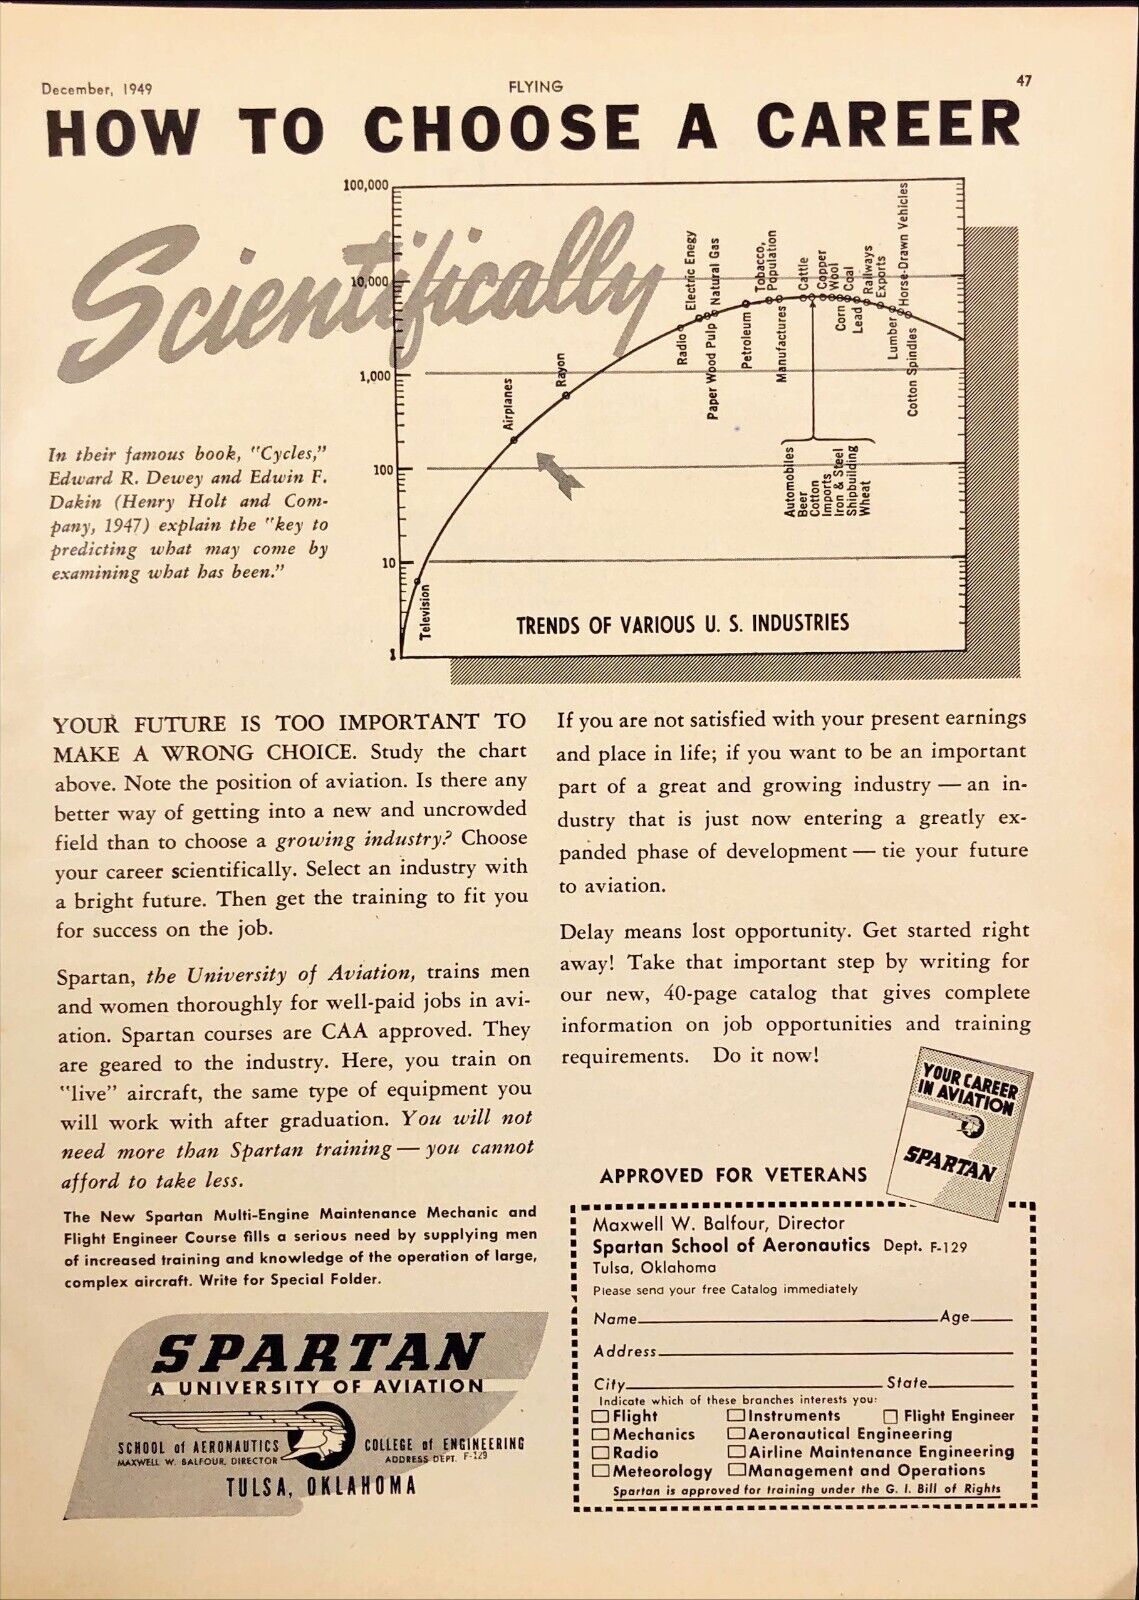 Spartan University of Aviation Career in Aviation Tulsa OK Vintage Print Ad 1949